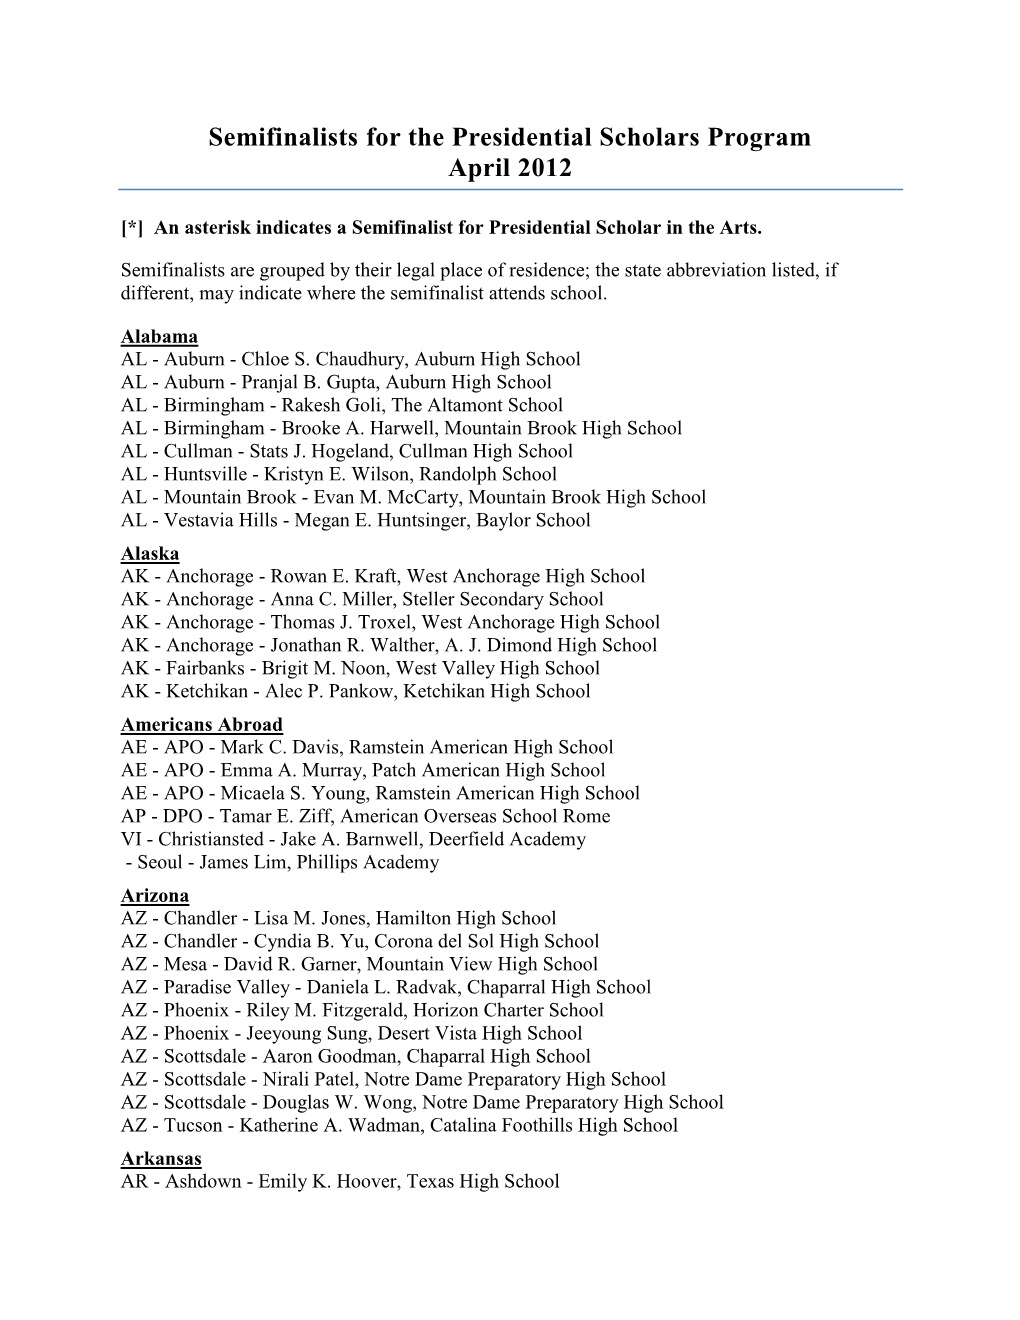 2012 Semifinalists for the Presidential Scholars Program -- April 2012 (PDF)